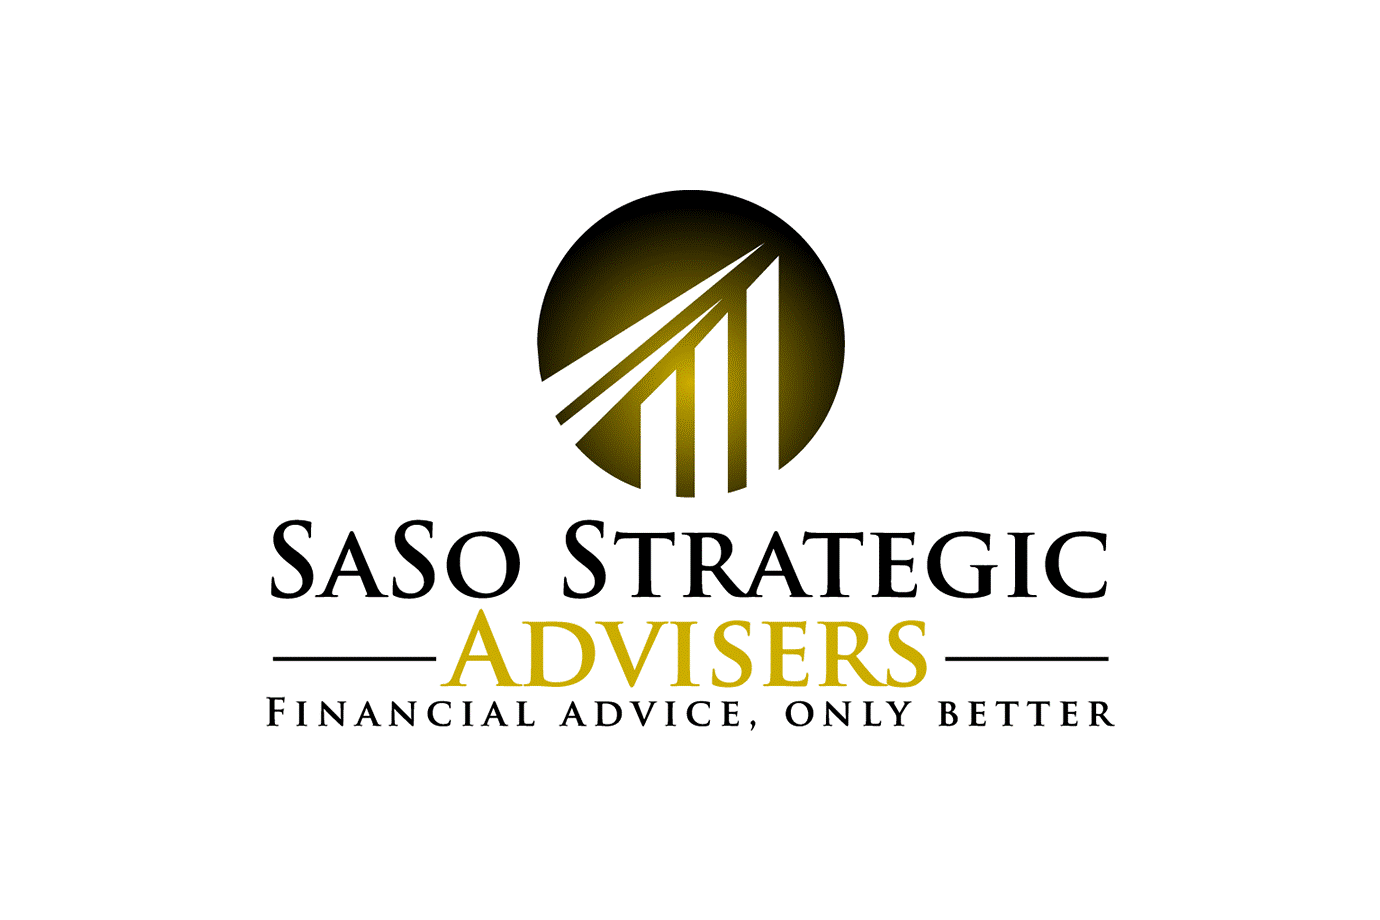 Player sponsor SaSo Strategic Advisers logo